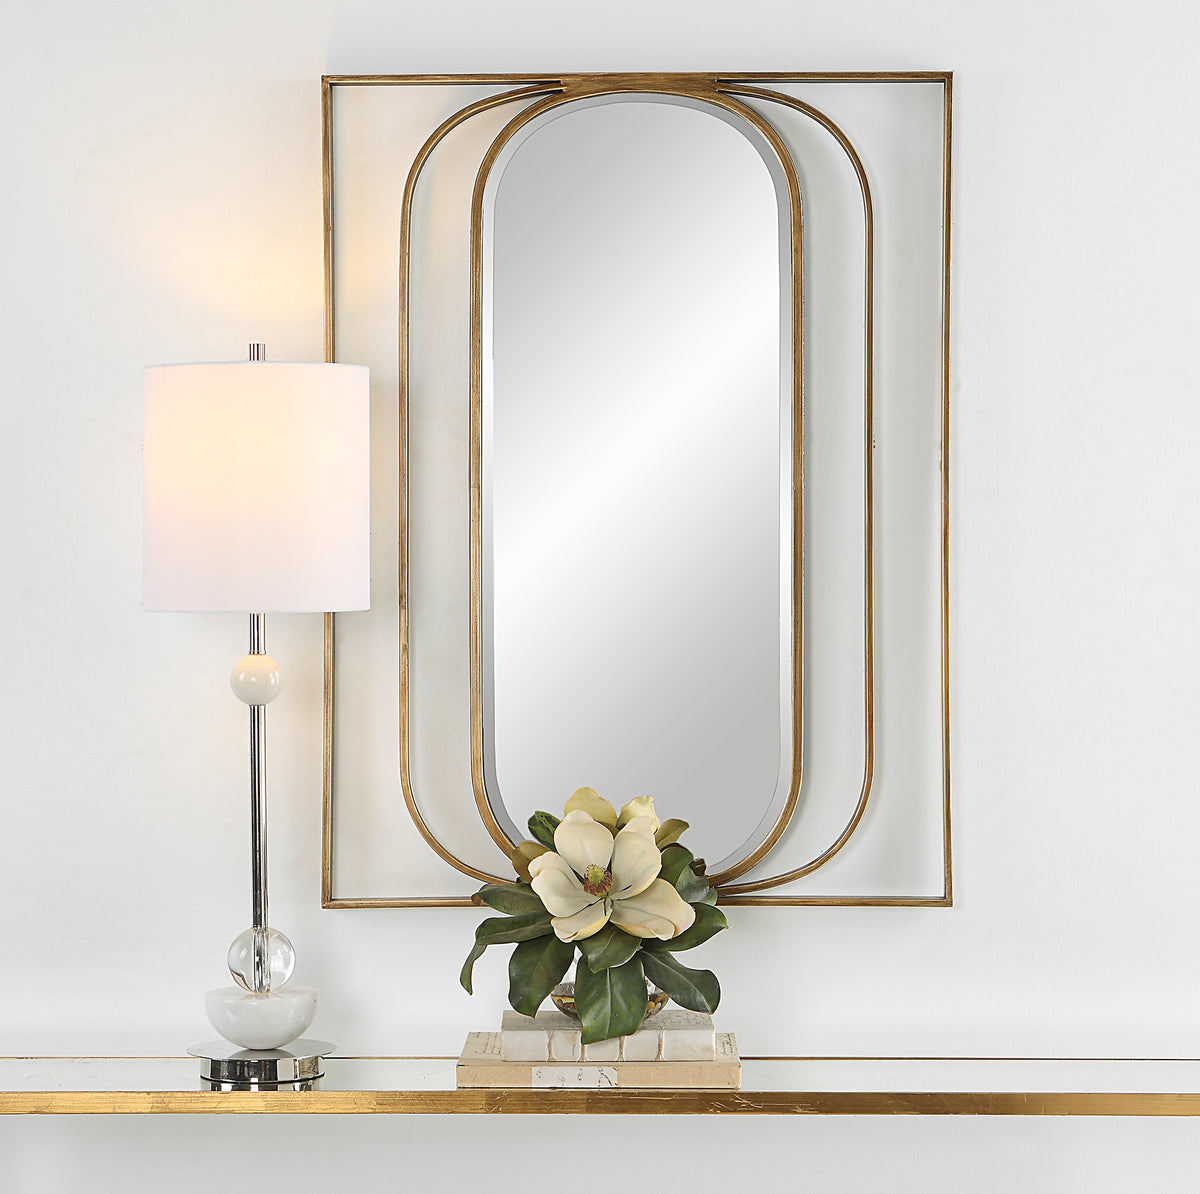 Uttermost Replicate Contemporary Oval Mirror